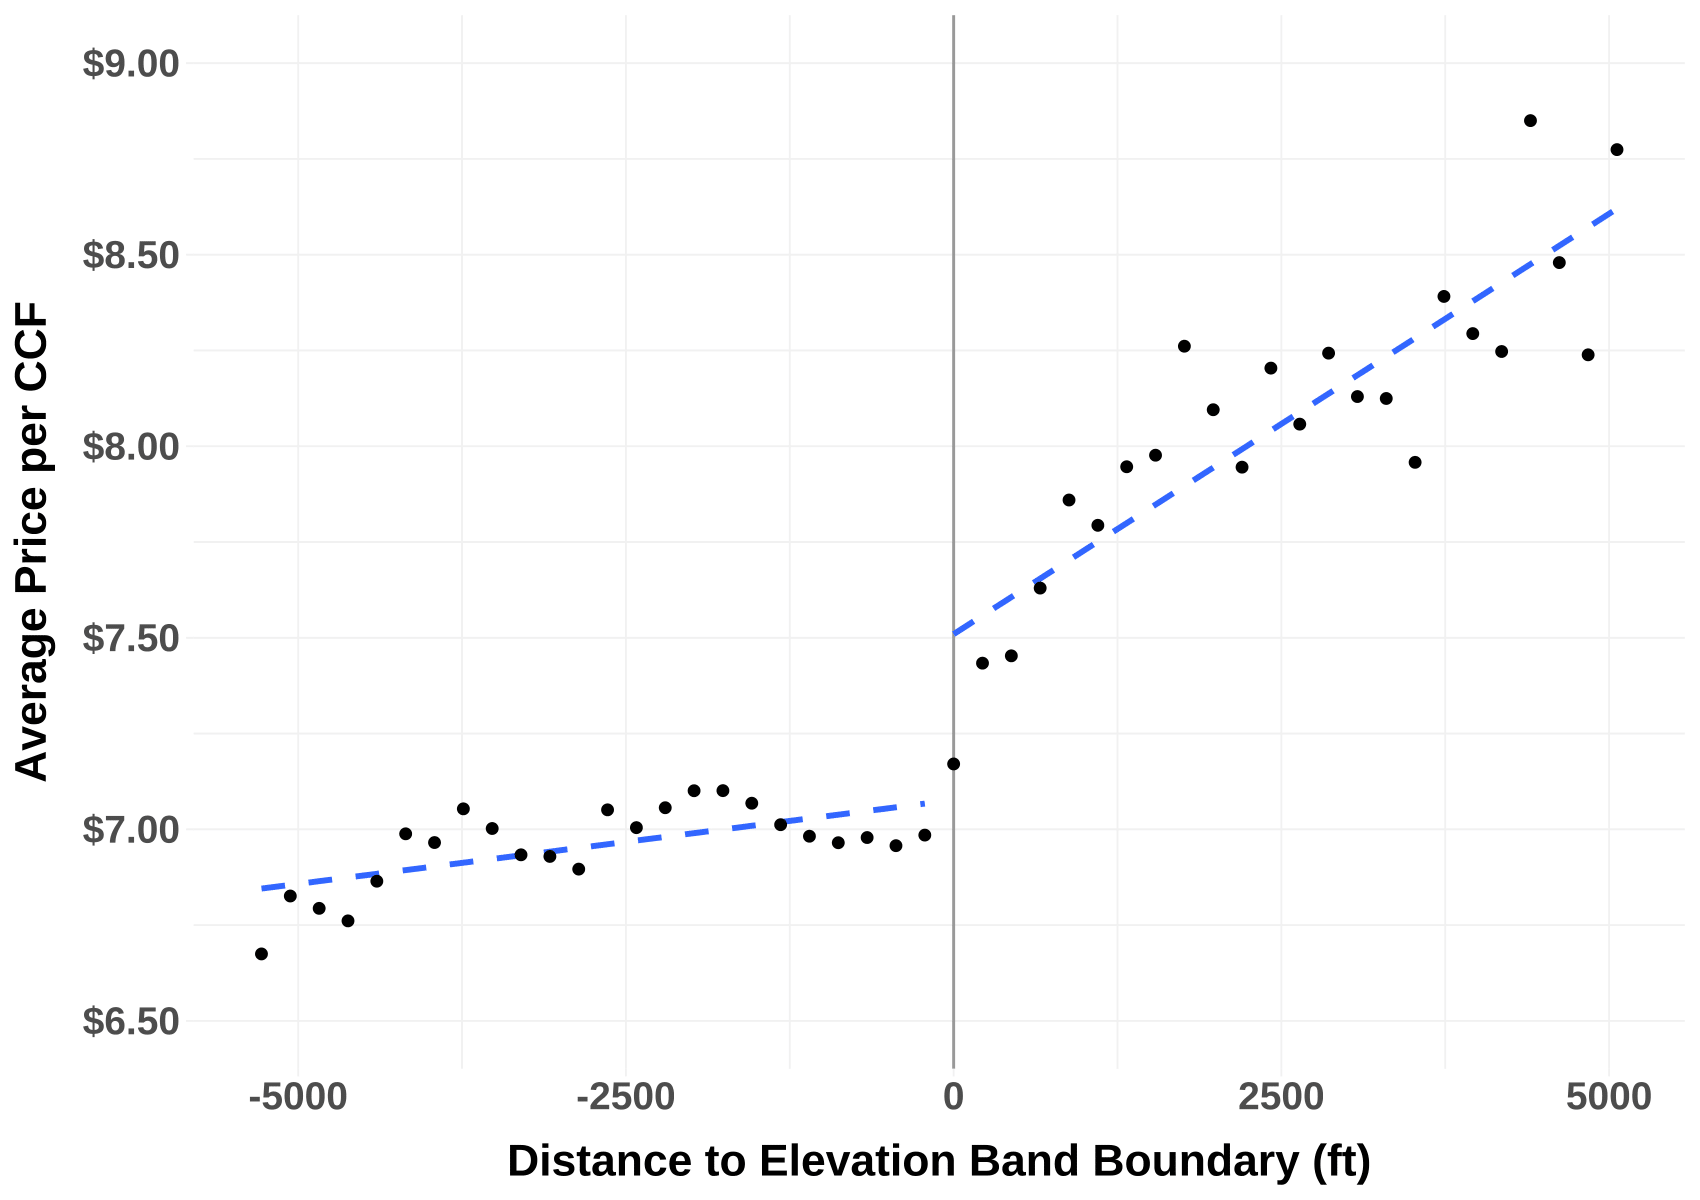 Variation in Average Prices around Elevation Band Boundaries